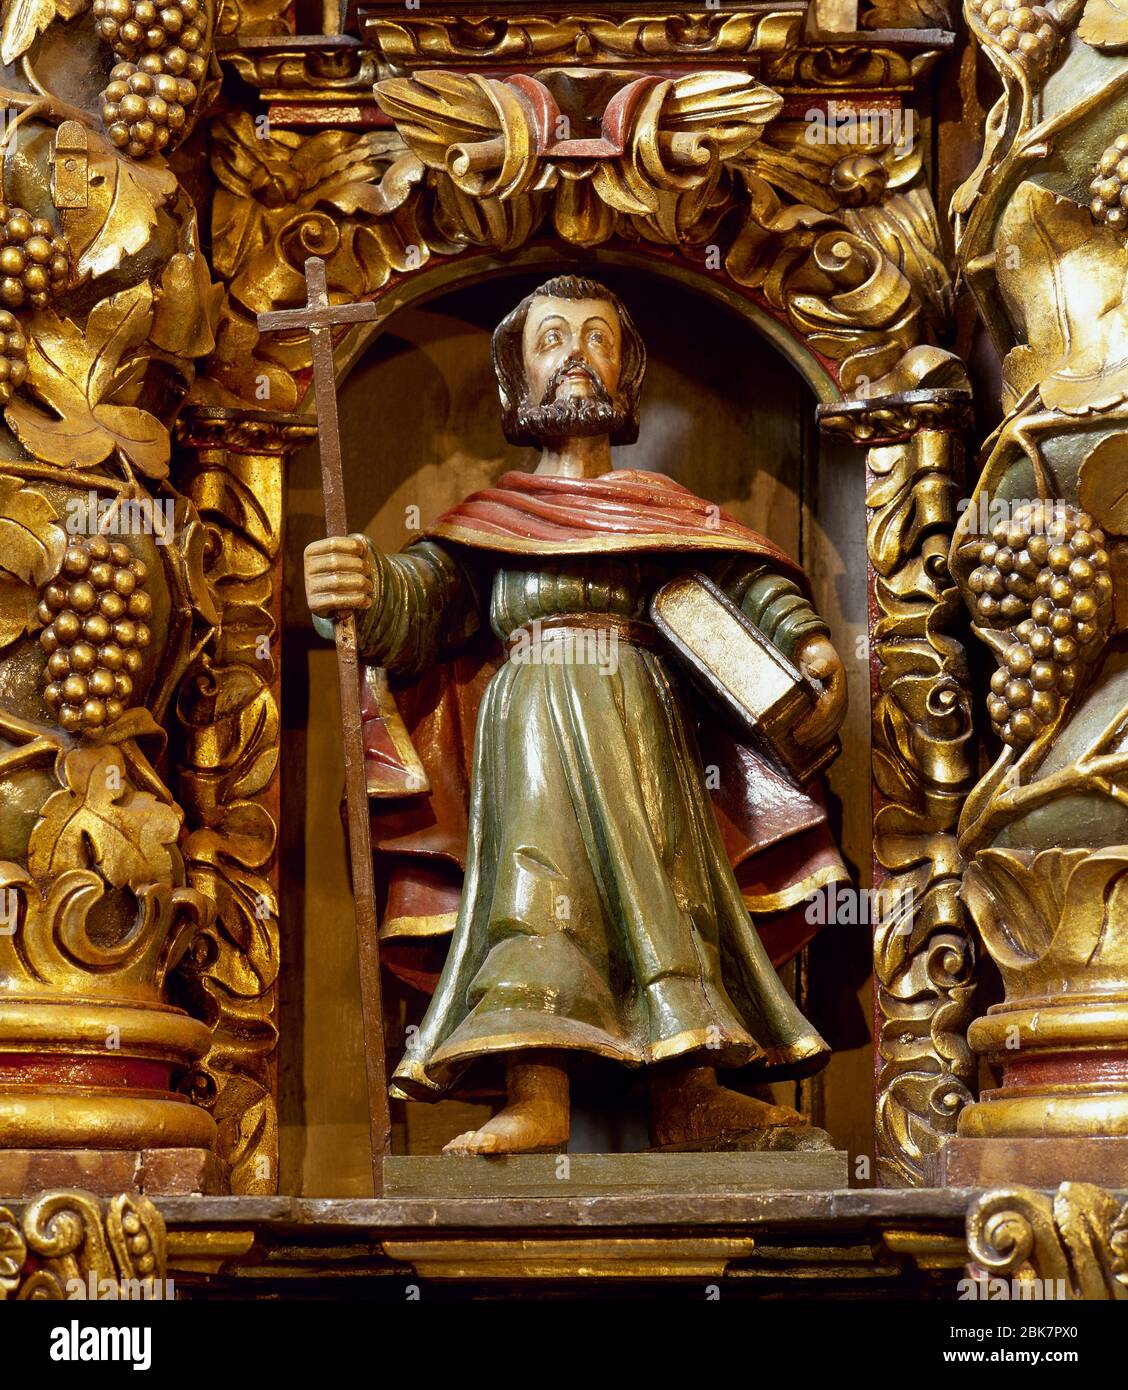 Philip the Apostle (d. 80 AD). Polychrome wood carving sculpture of the Baroque altarpiece (18th century), Sanctuary of San Andres de Teixido, La Coruña province, Galicia, Spain. Stock Photo